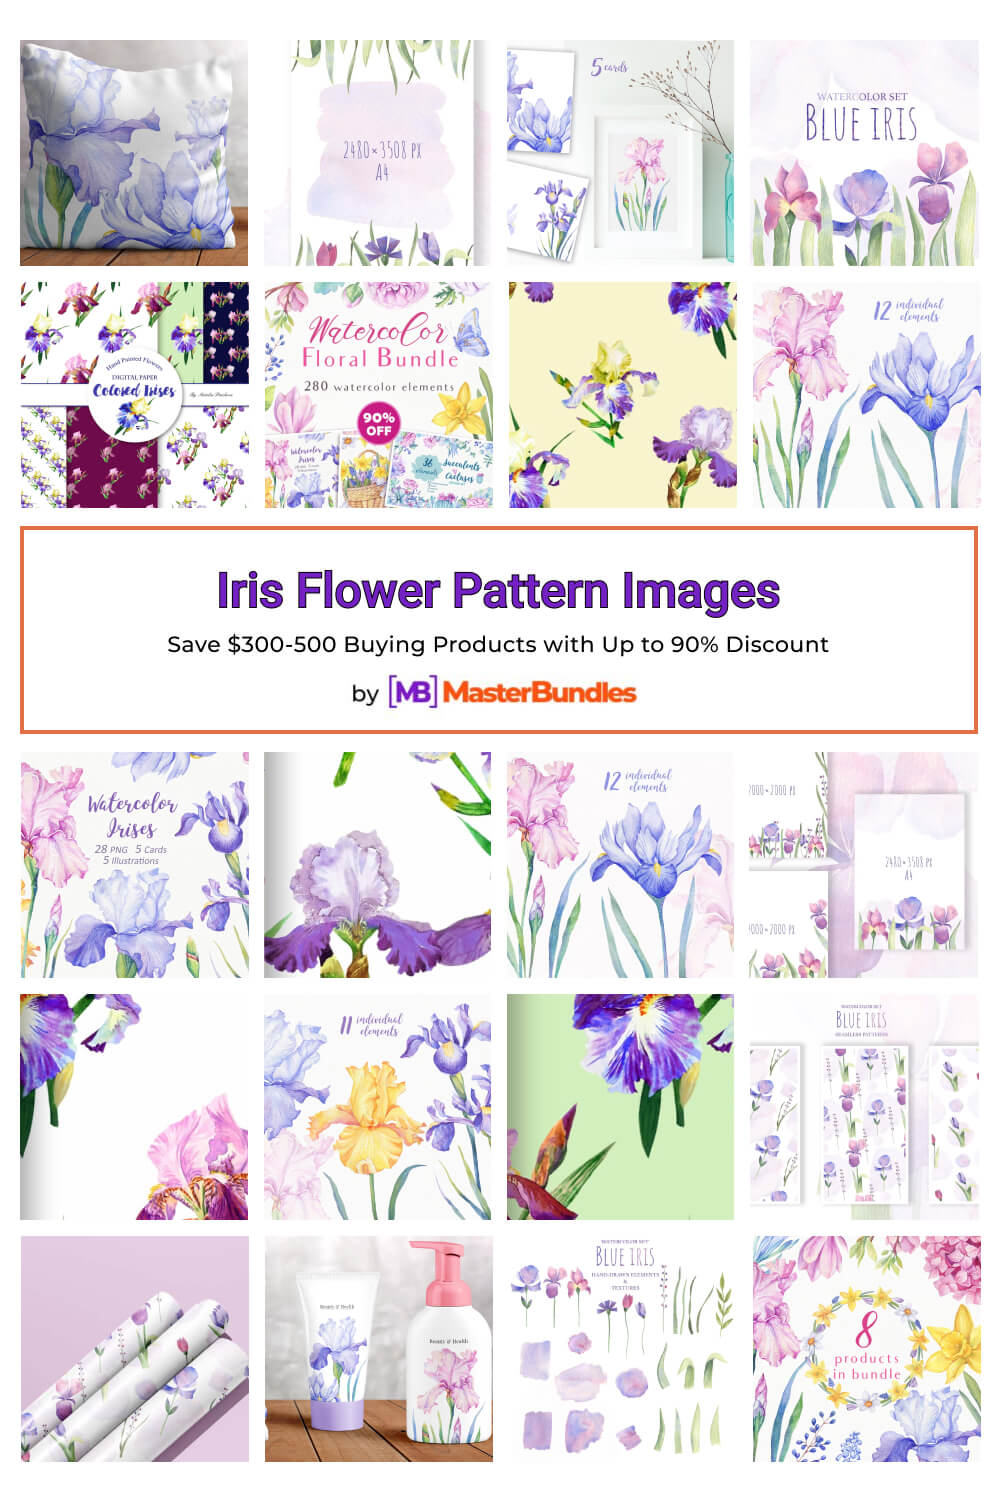 iris flower pattern images pinterest image.